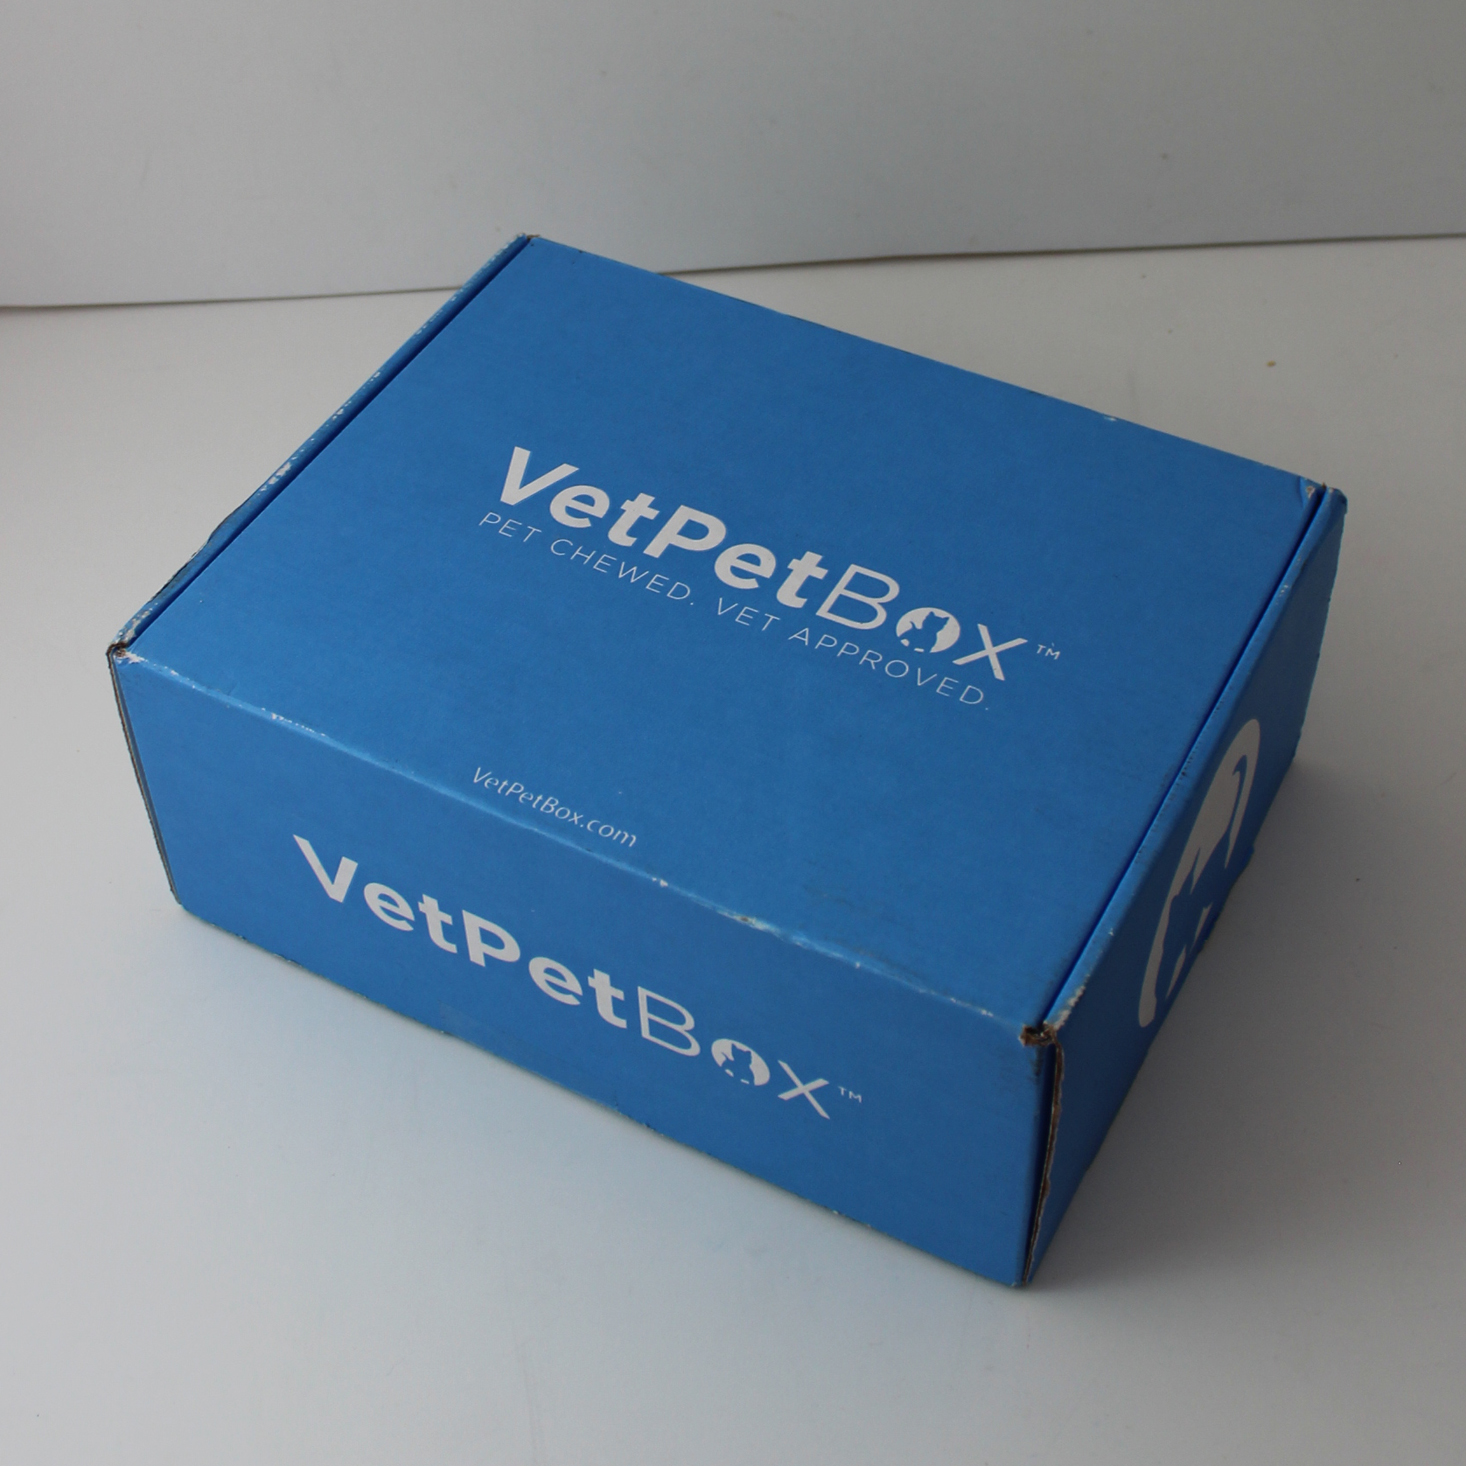 VetPet Box Cat Subscription Review + Coupon – September 2020